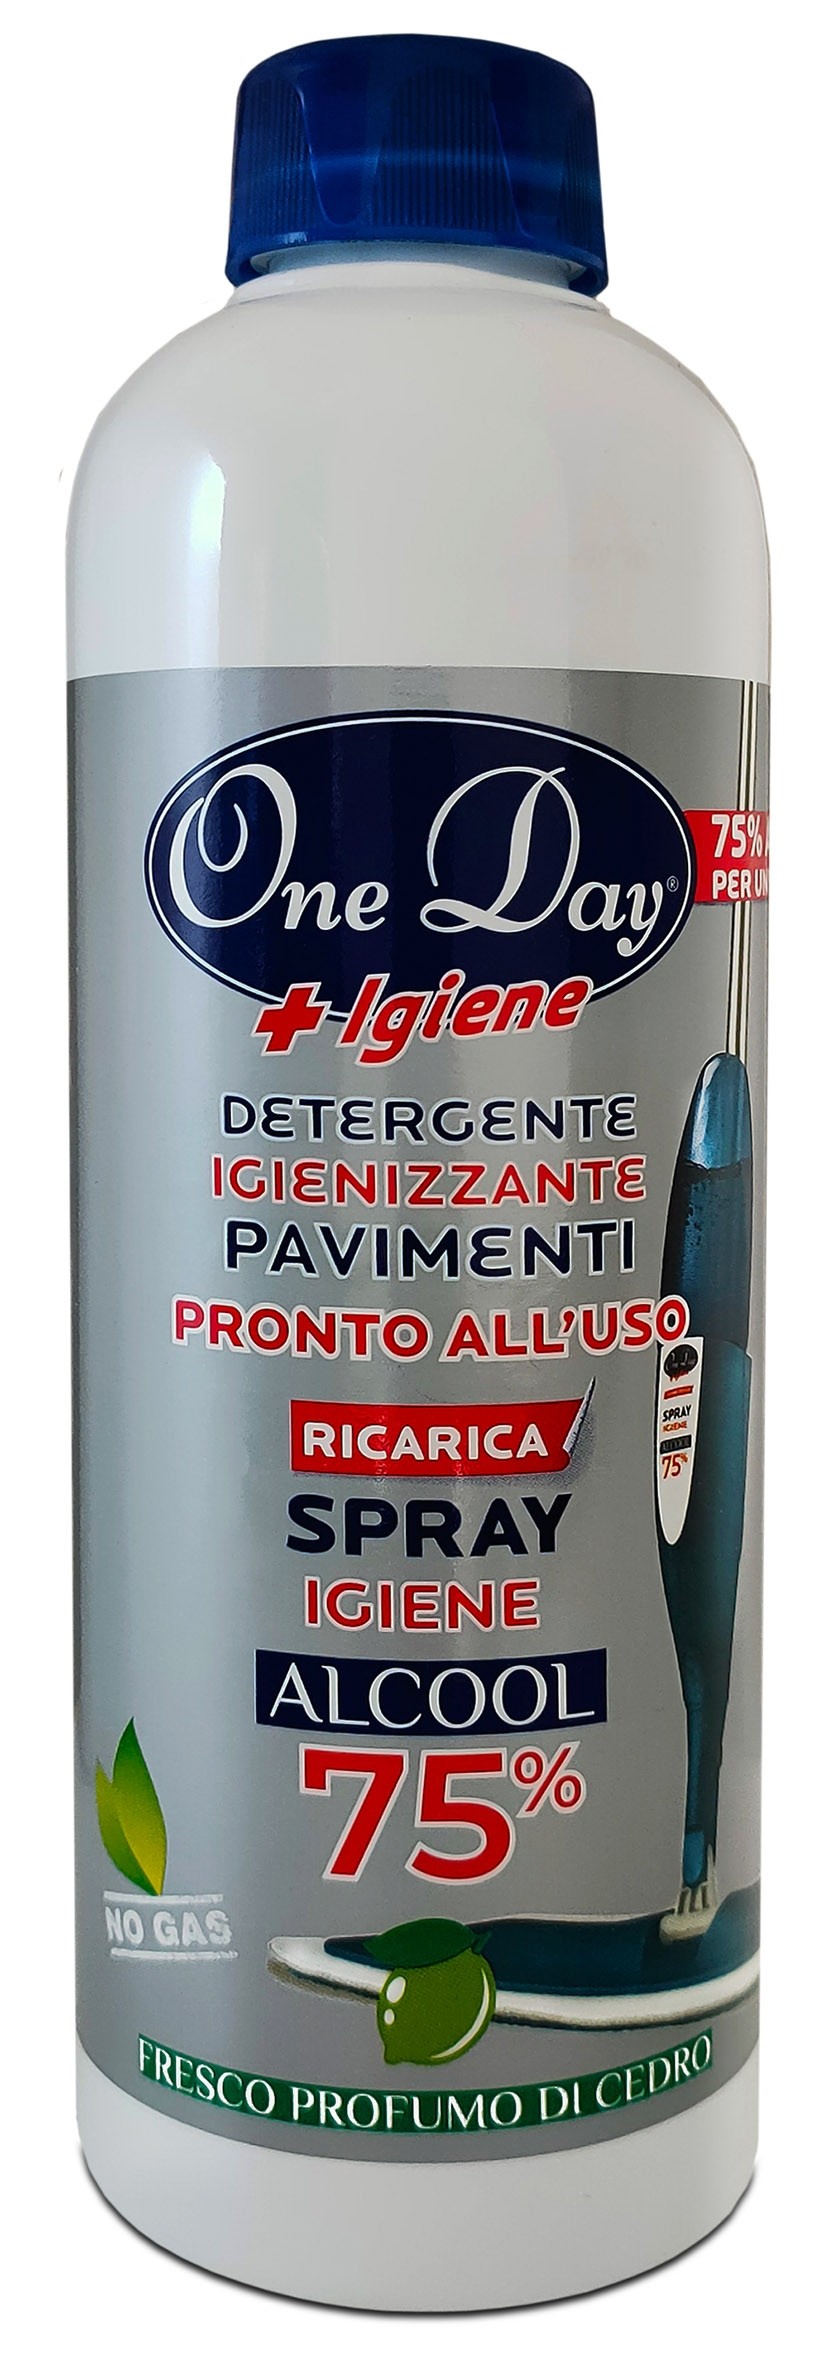 Ricarica Spray Igiene Alcool 75%